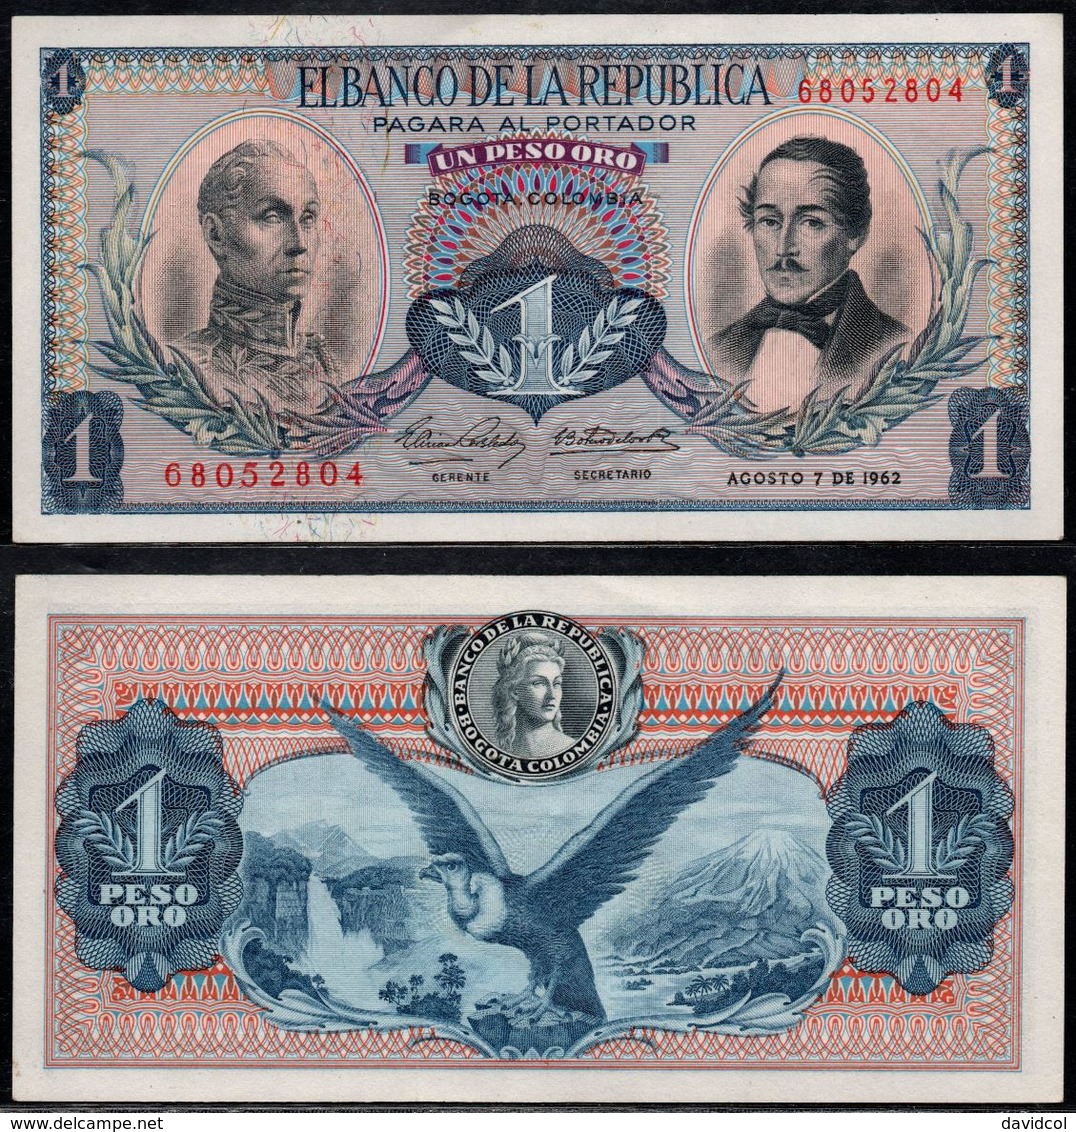 COLOMBIA - 1962 - UN PESO ORO ( $ 1 ) - UNCIRCULATED. CONDITION 9/10 - Colombie